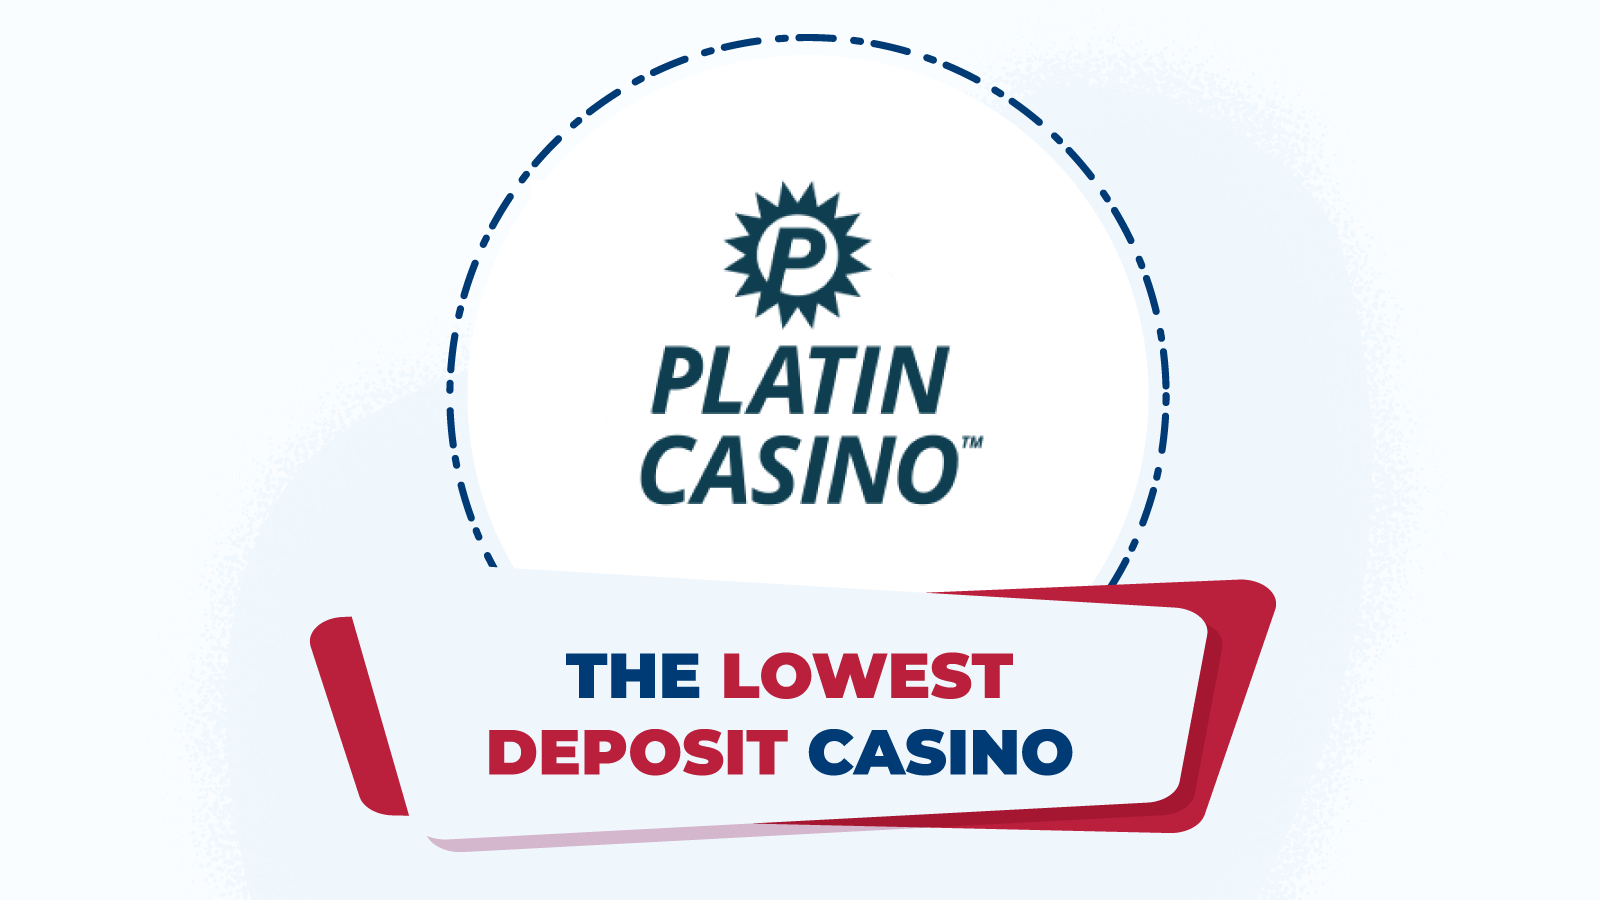 The lowest deposit casino – Platin Casino